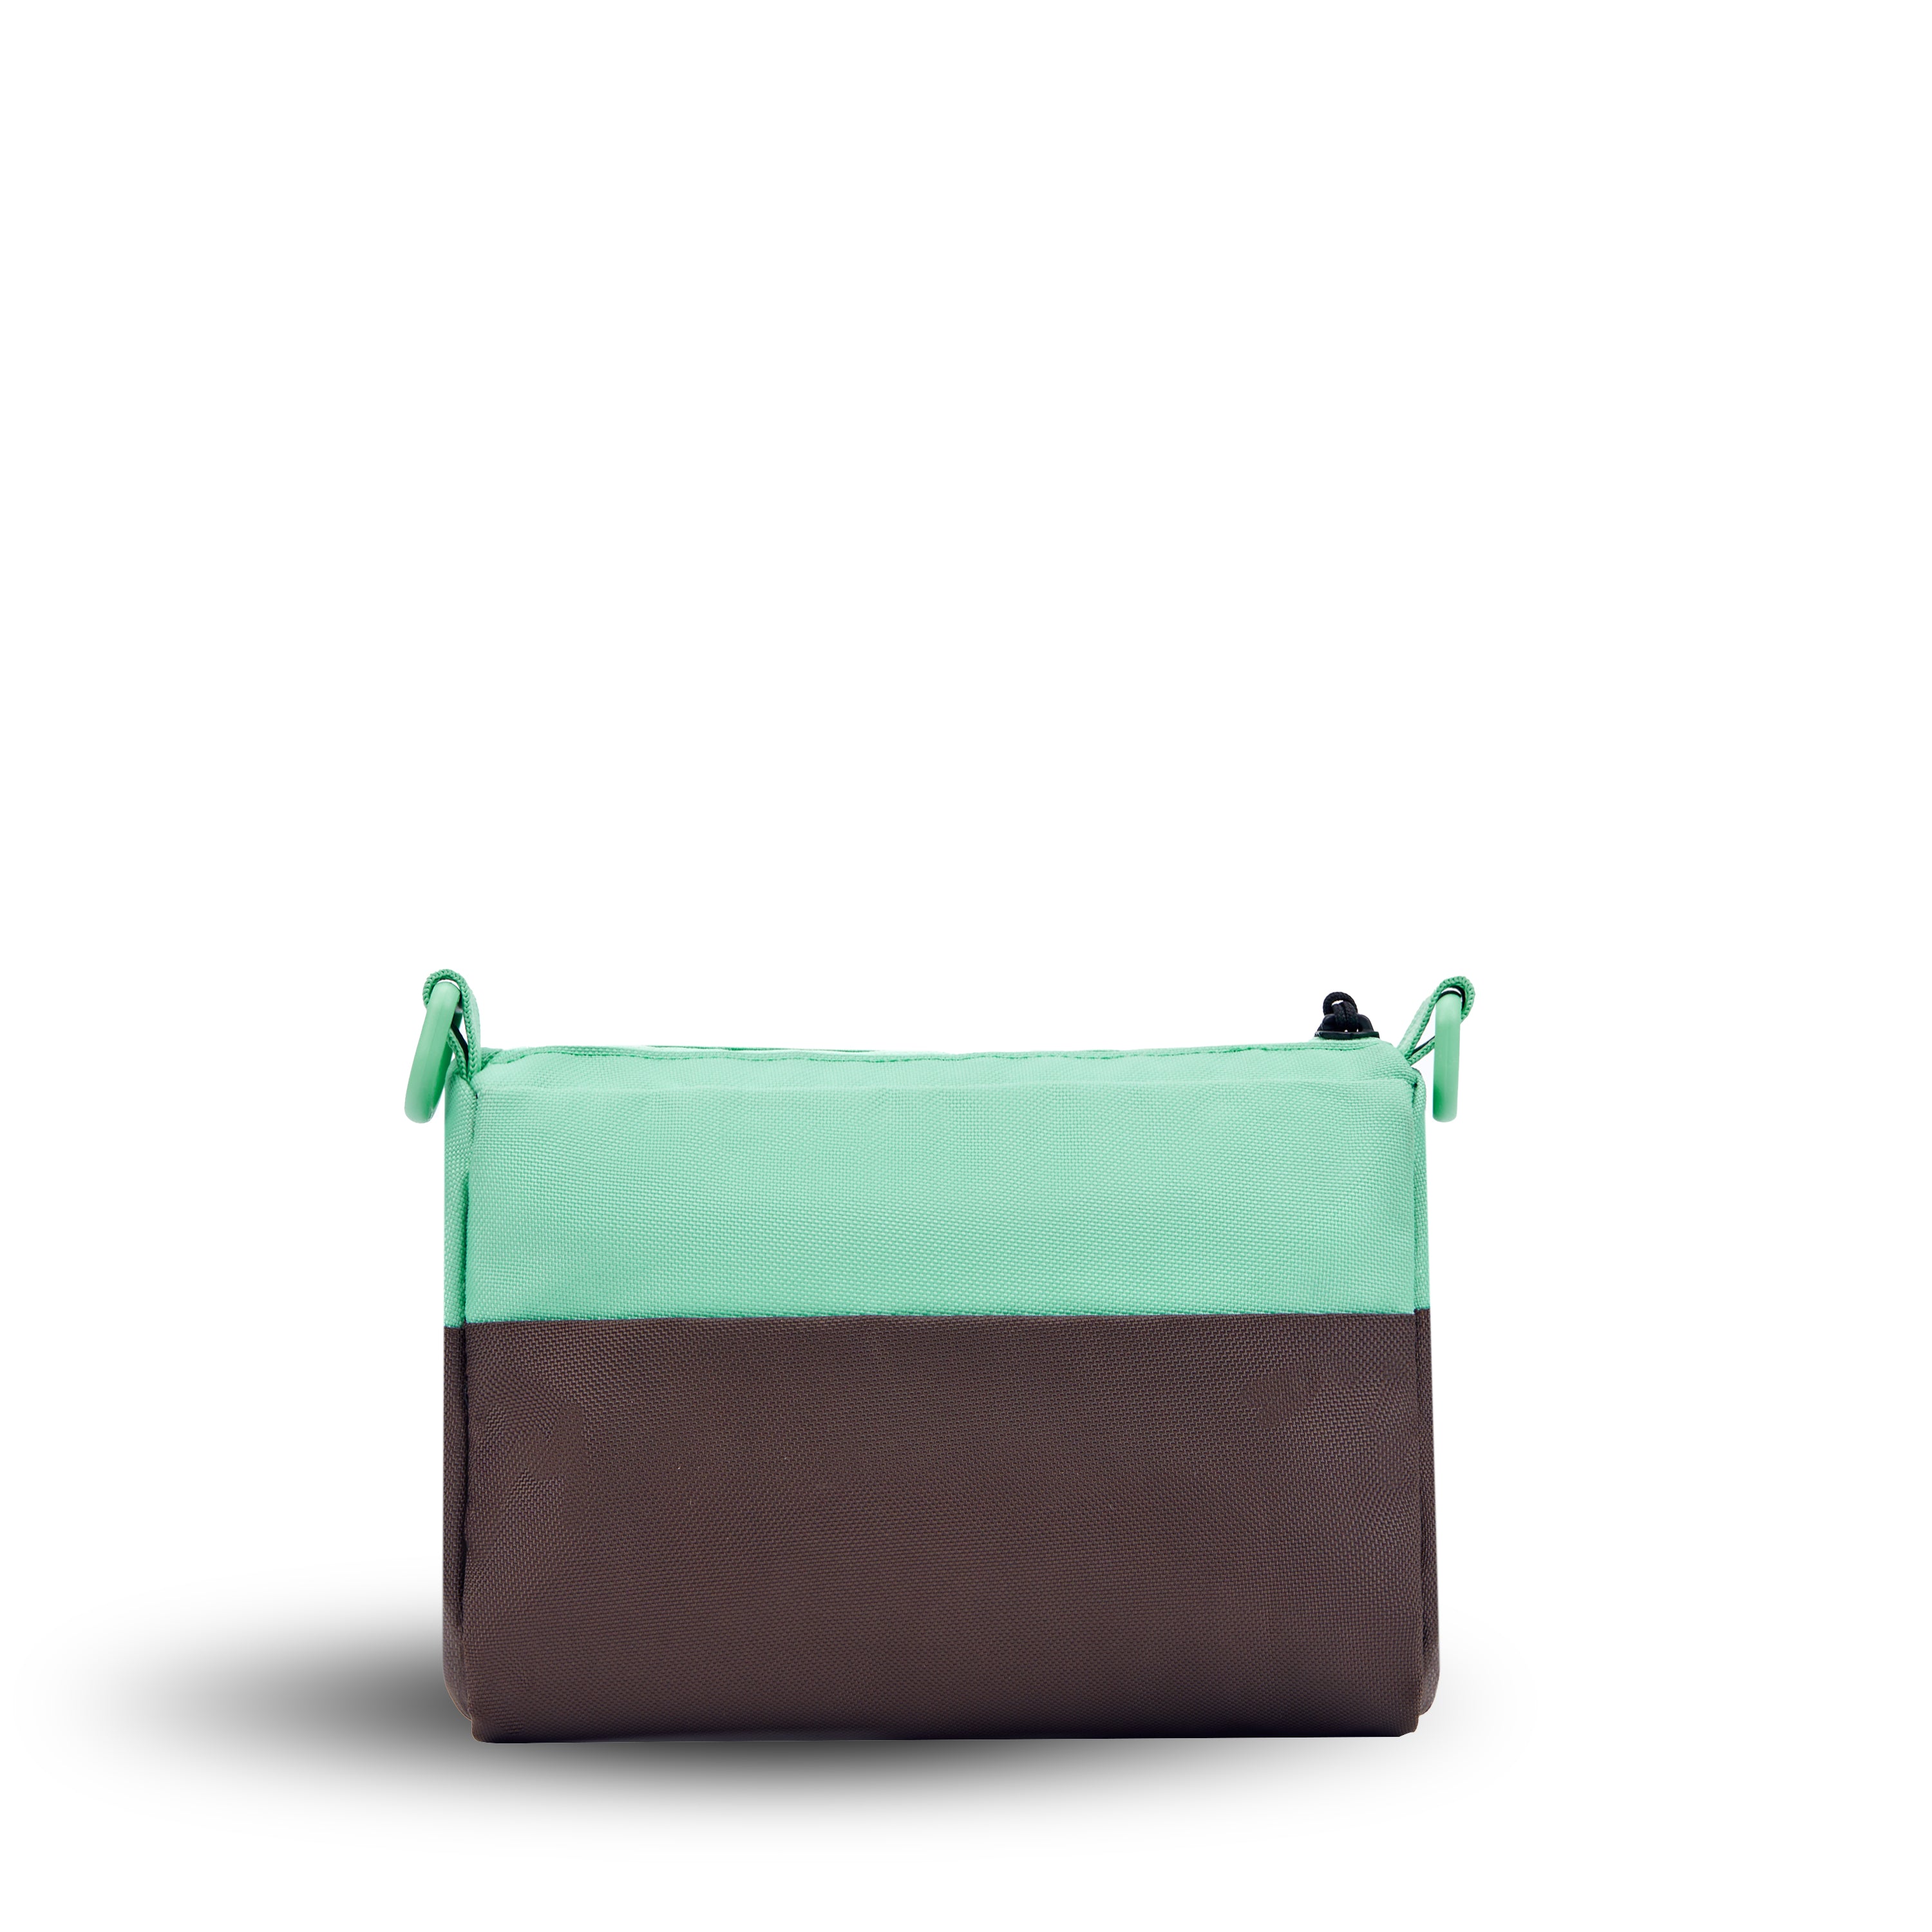 Sherpani Skye Handbag/Crossbody seagreen